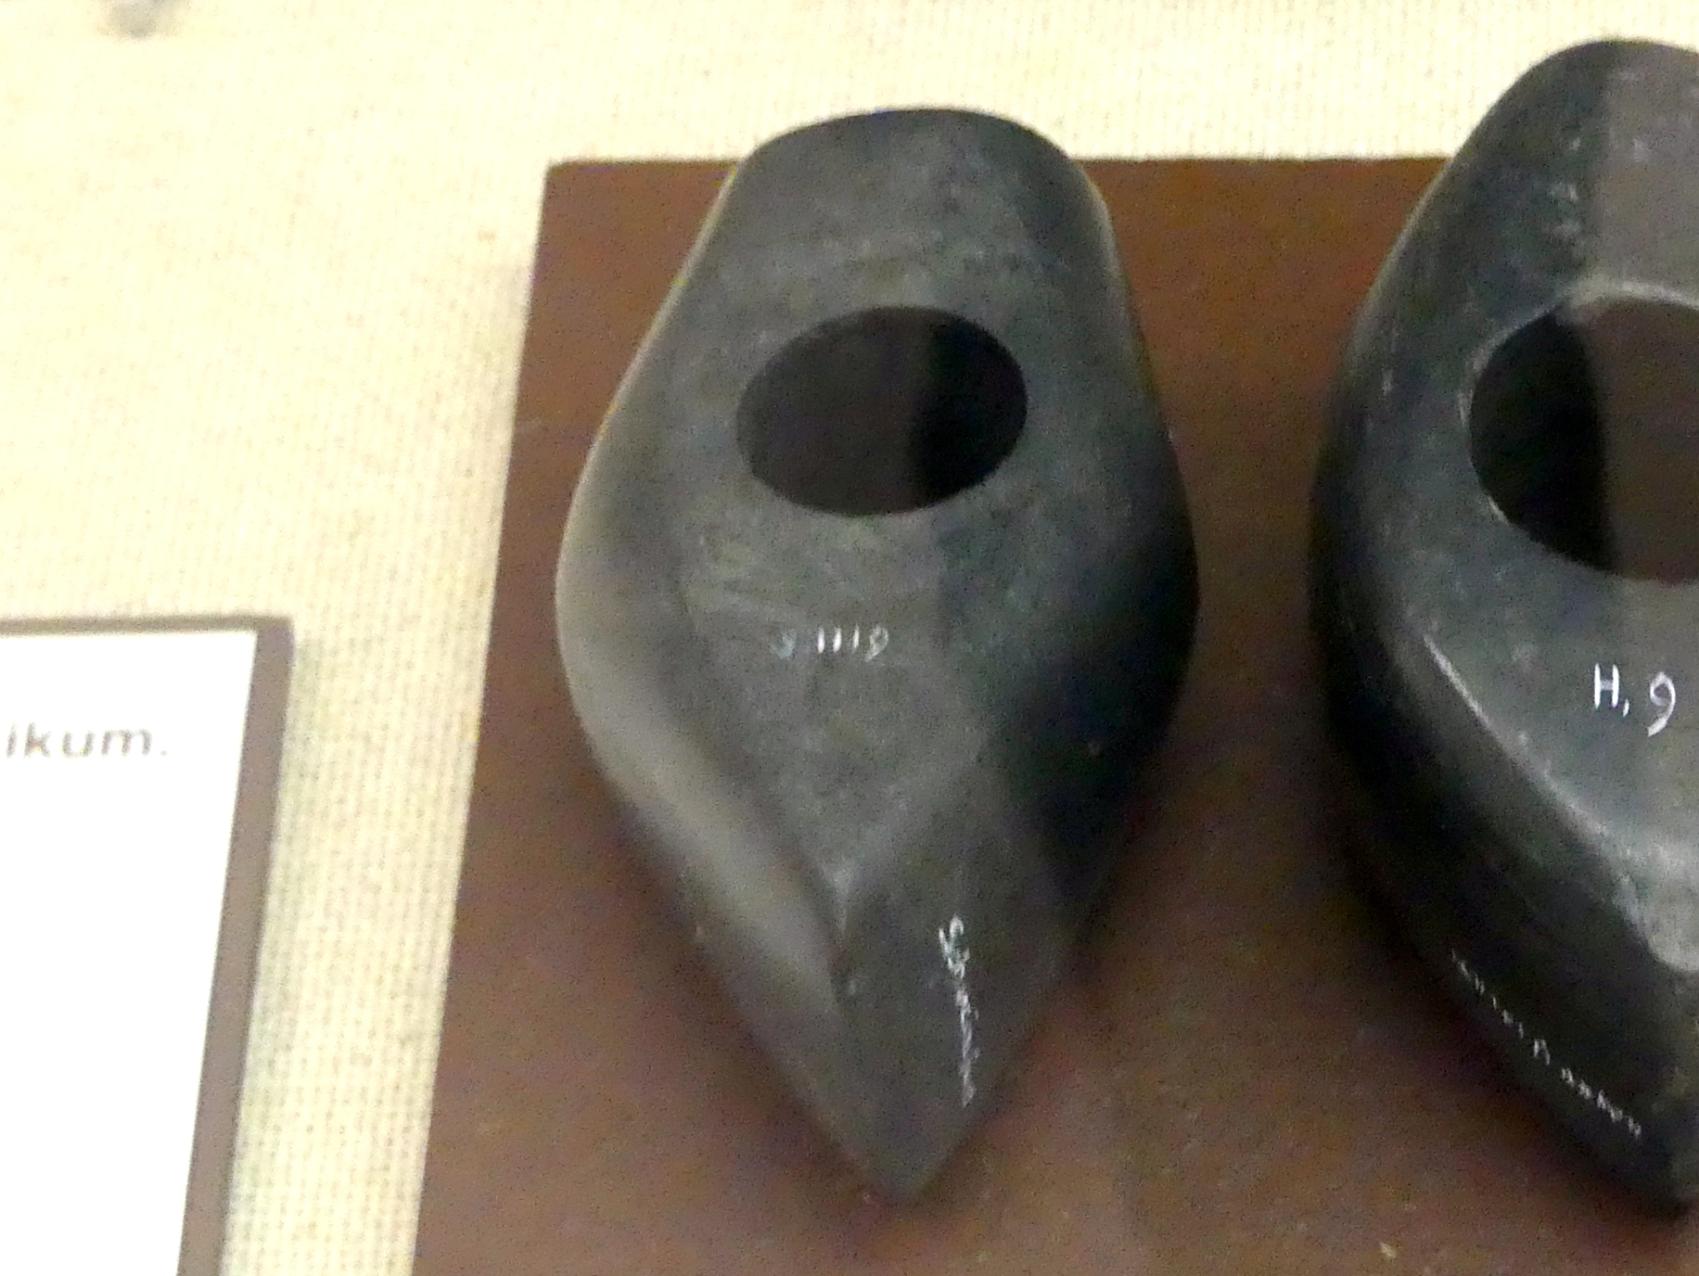 Hammeraxt, Endneolithikum, 2800 - 1700 v. Chr., Bild 1/2